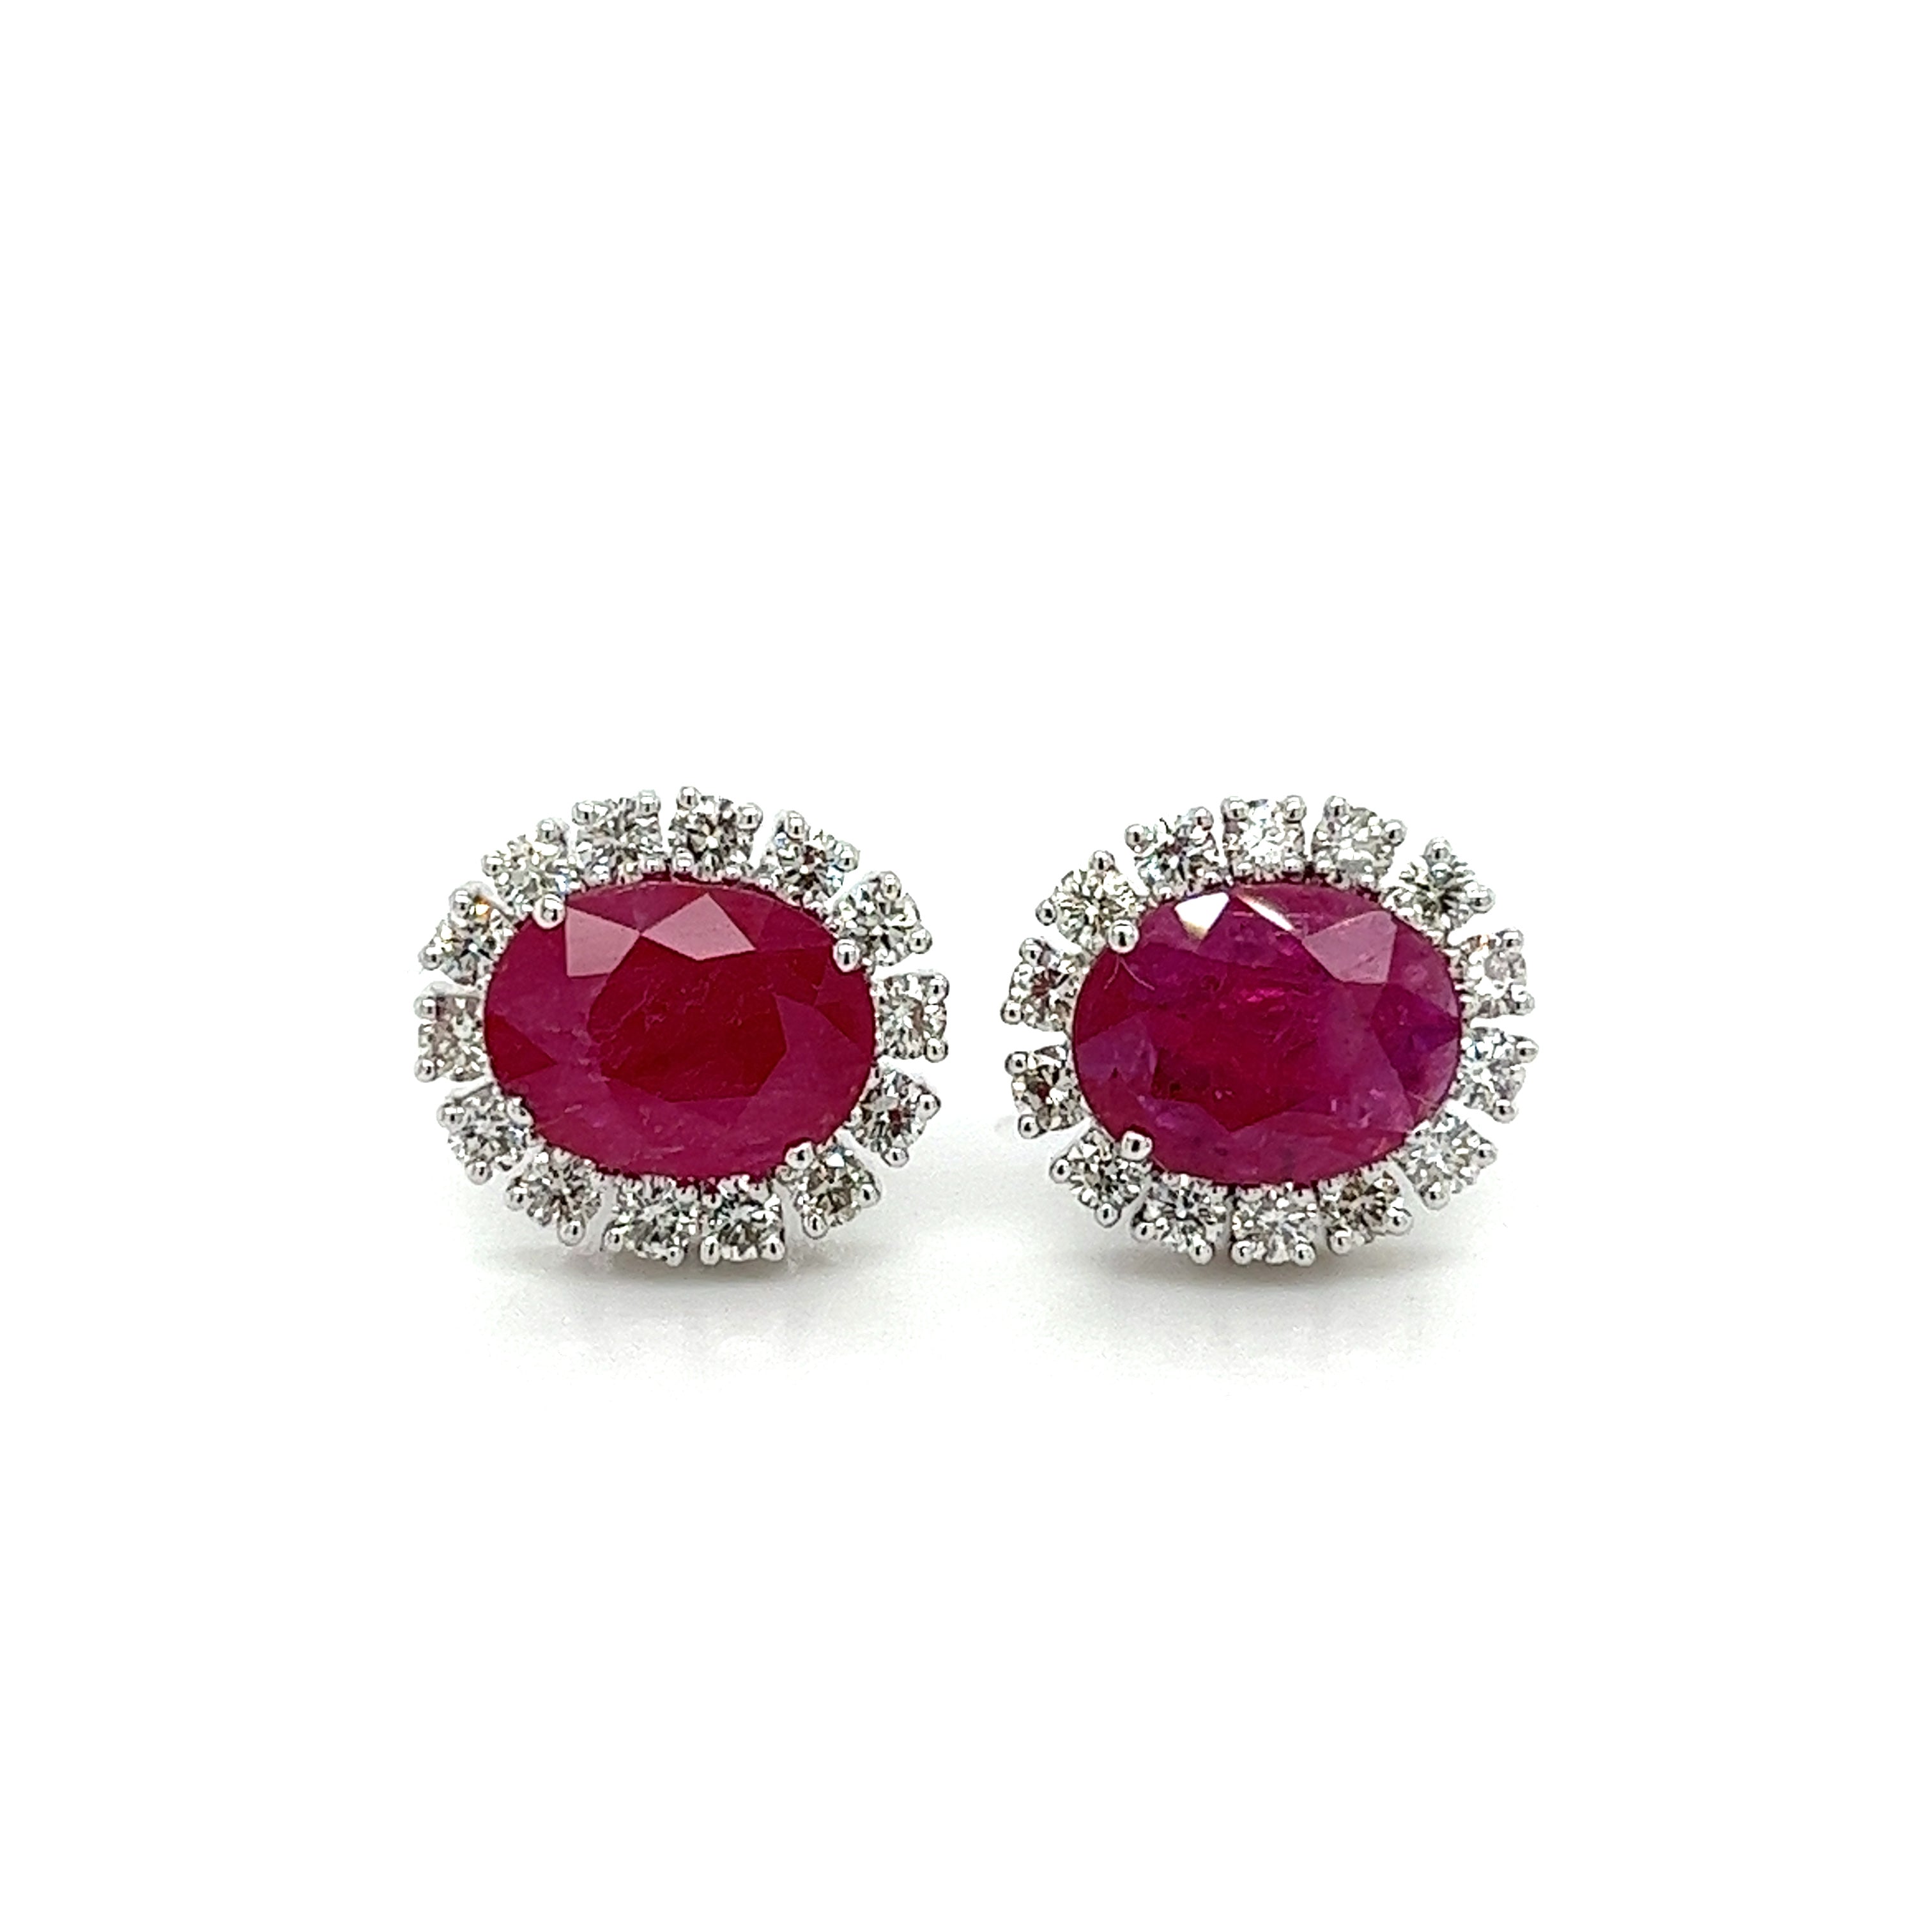 3.5 Carat No Heat Oval Cut Ruby Earrings With Round Diamond Halo-Earrings-ASSAY